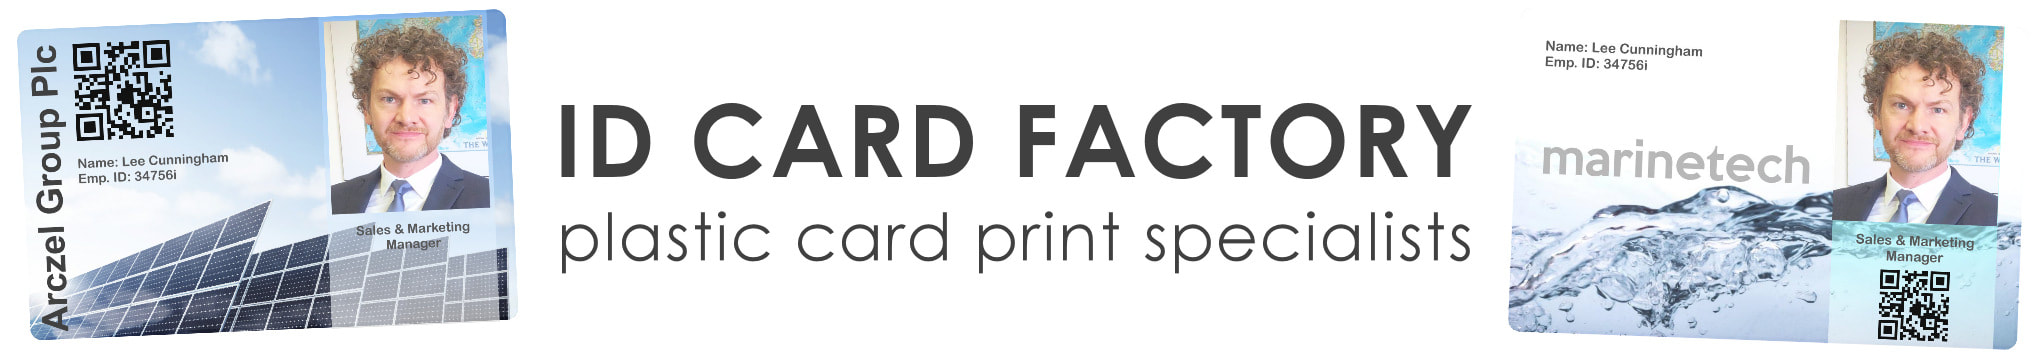 Chelmsford ID card printing | staff photo ID cards | company employee ID card print service | Local Identity Card Printing | Custom Design 